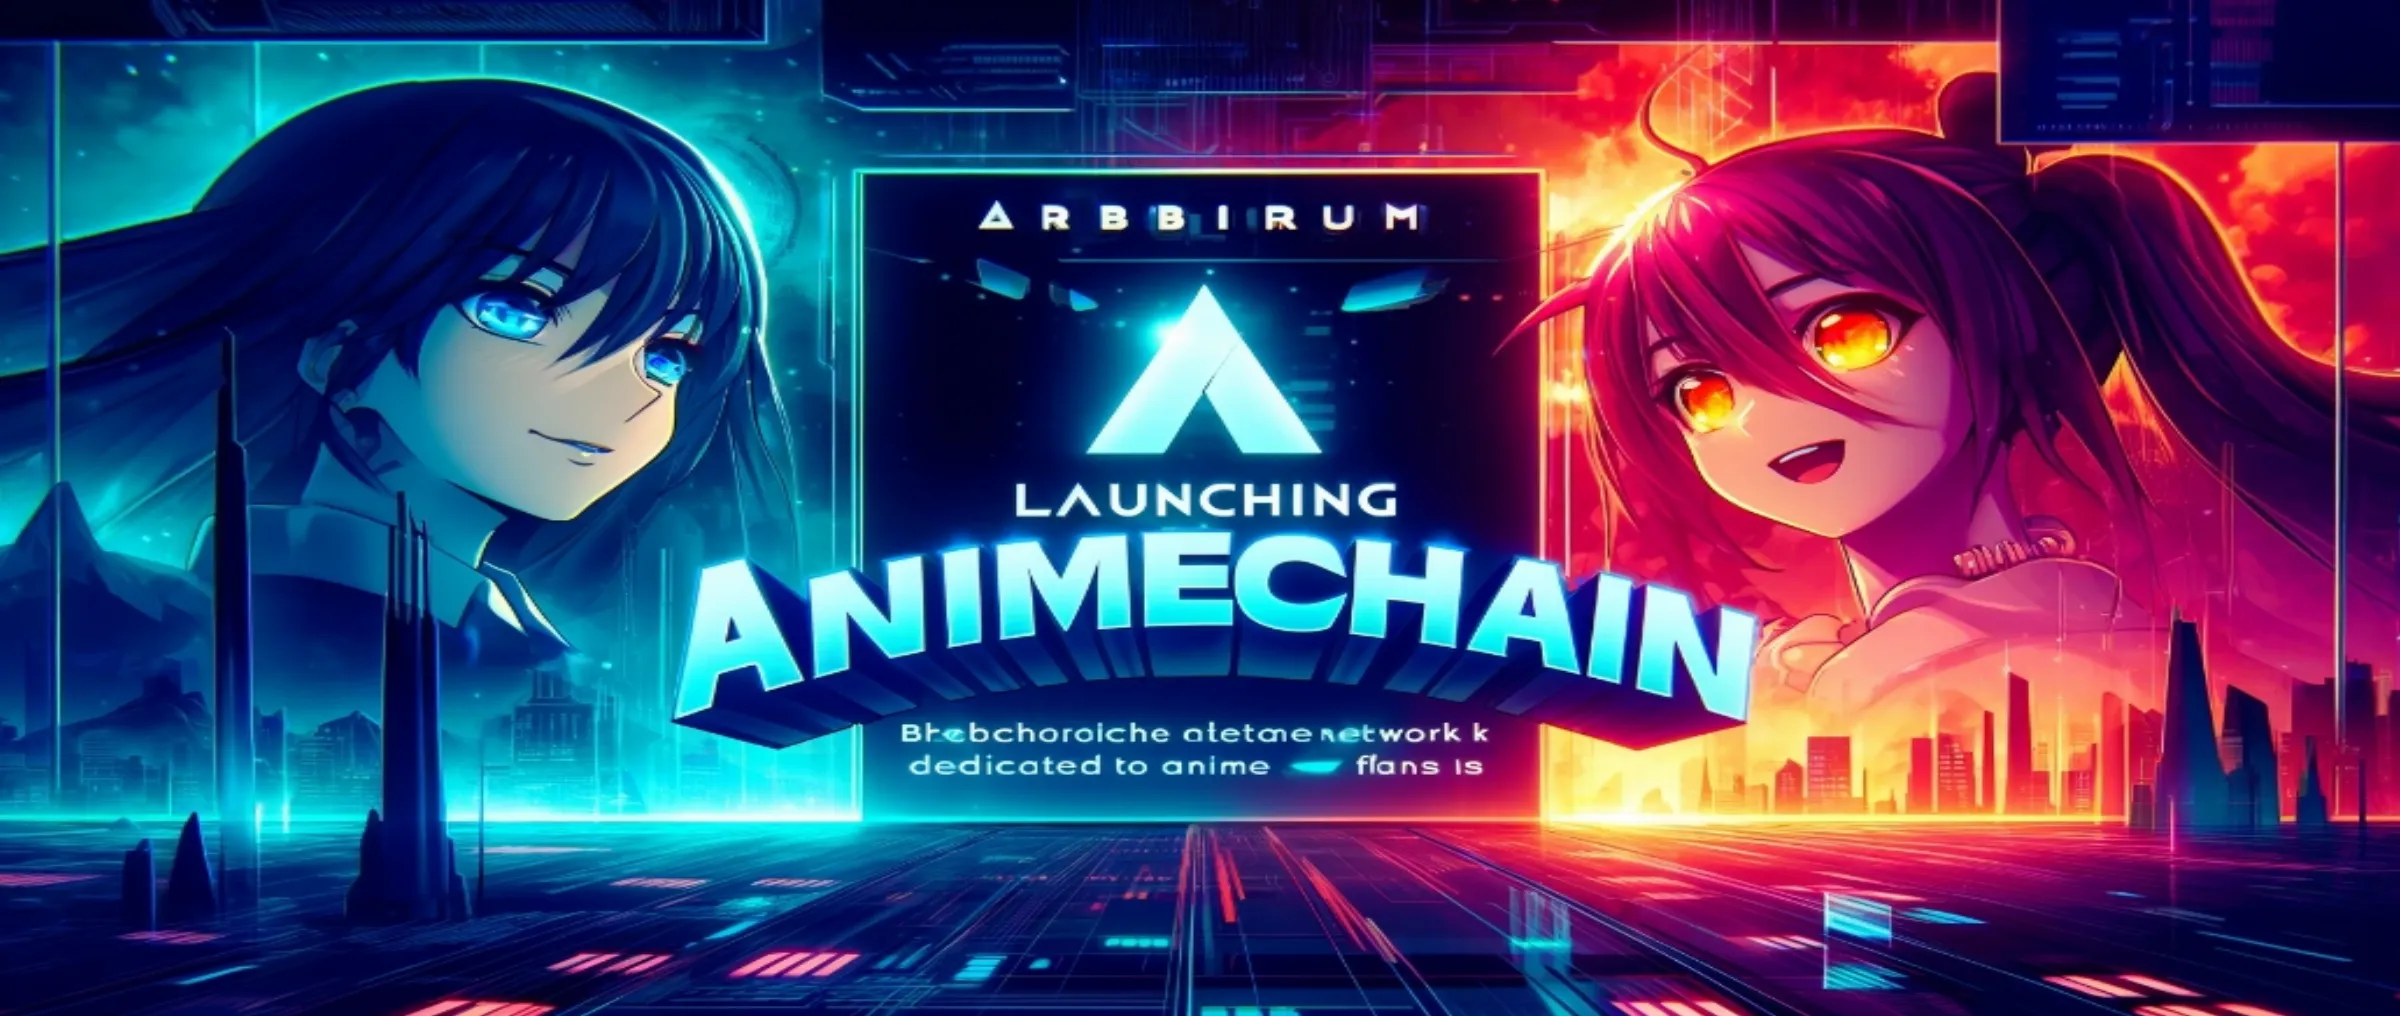 Arbitrum and Azuki launch AnimeChain, a network for anime fans